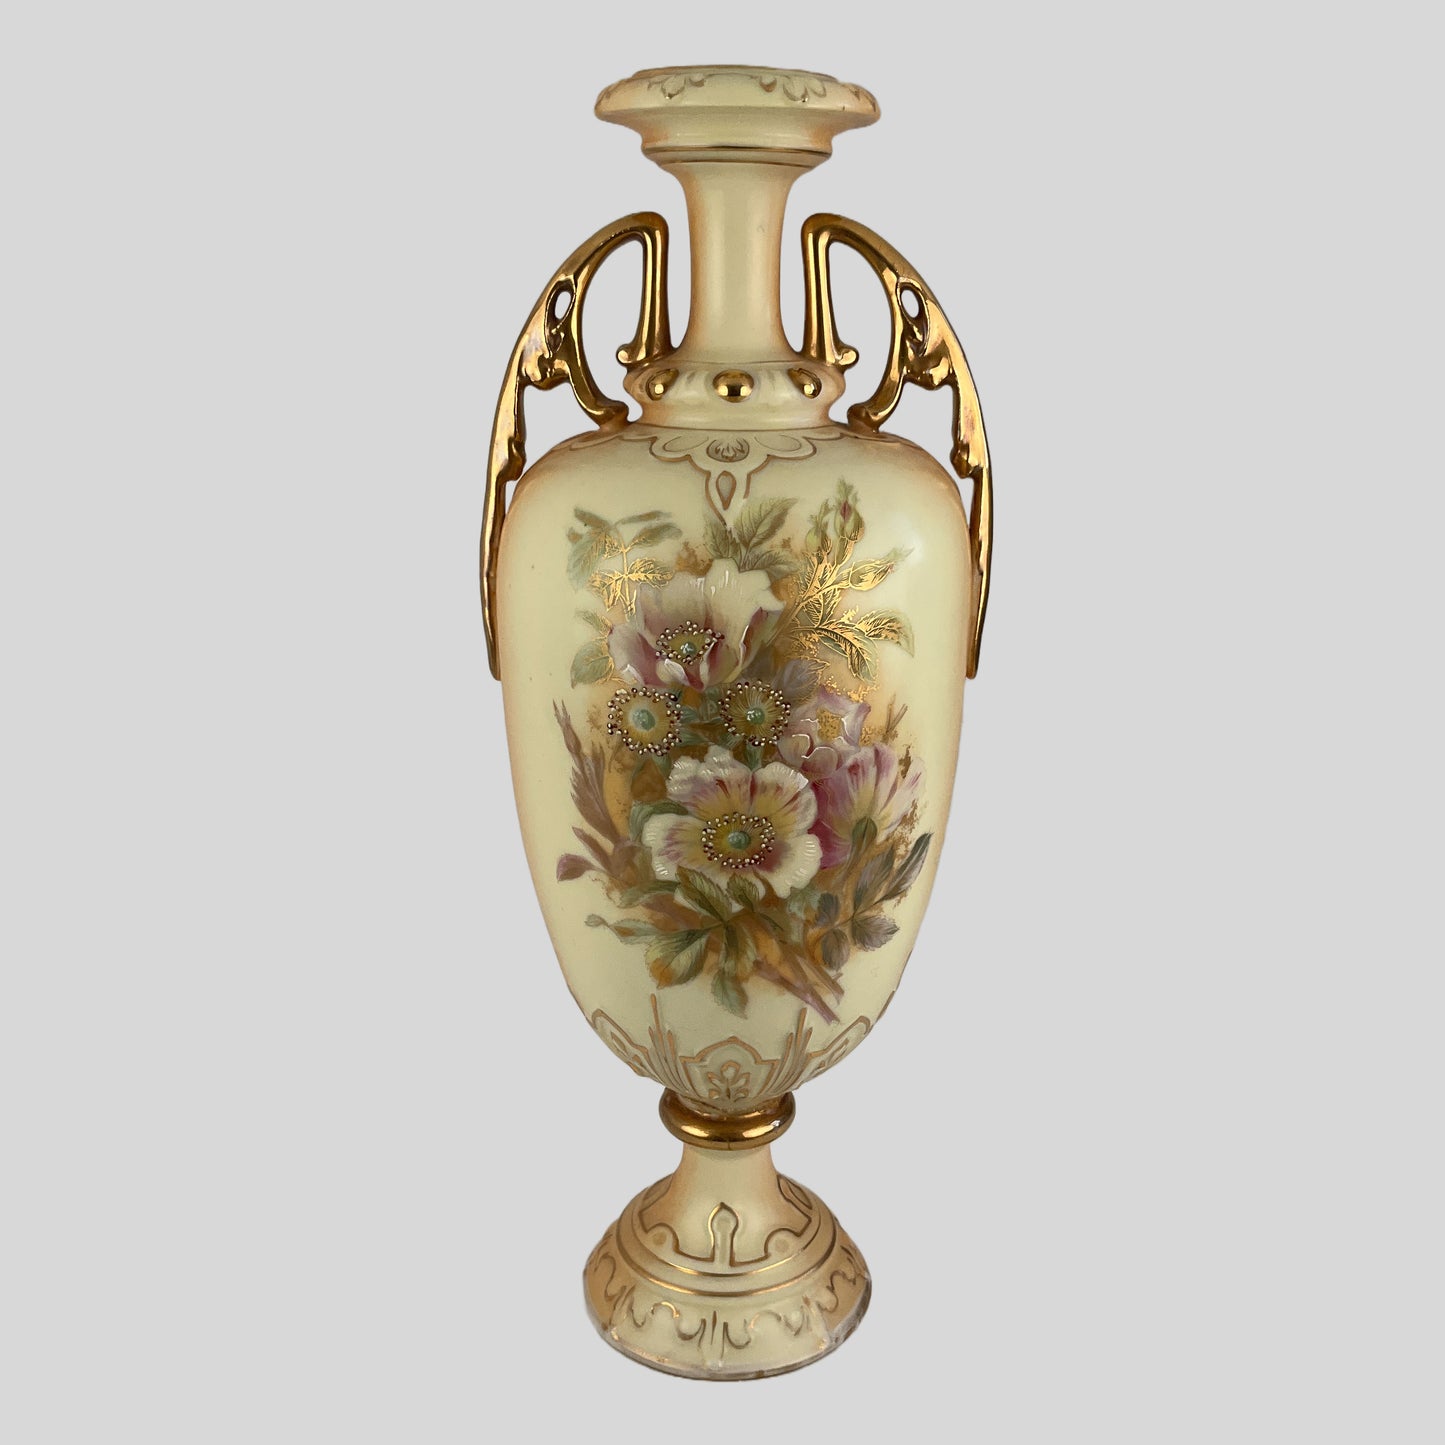 Robert Hanke - Art Nouveau Vase